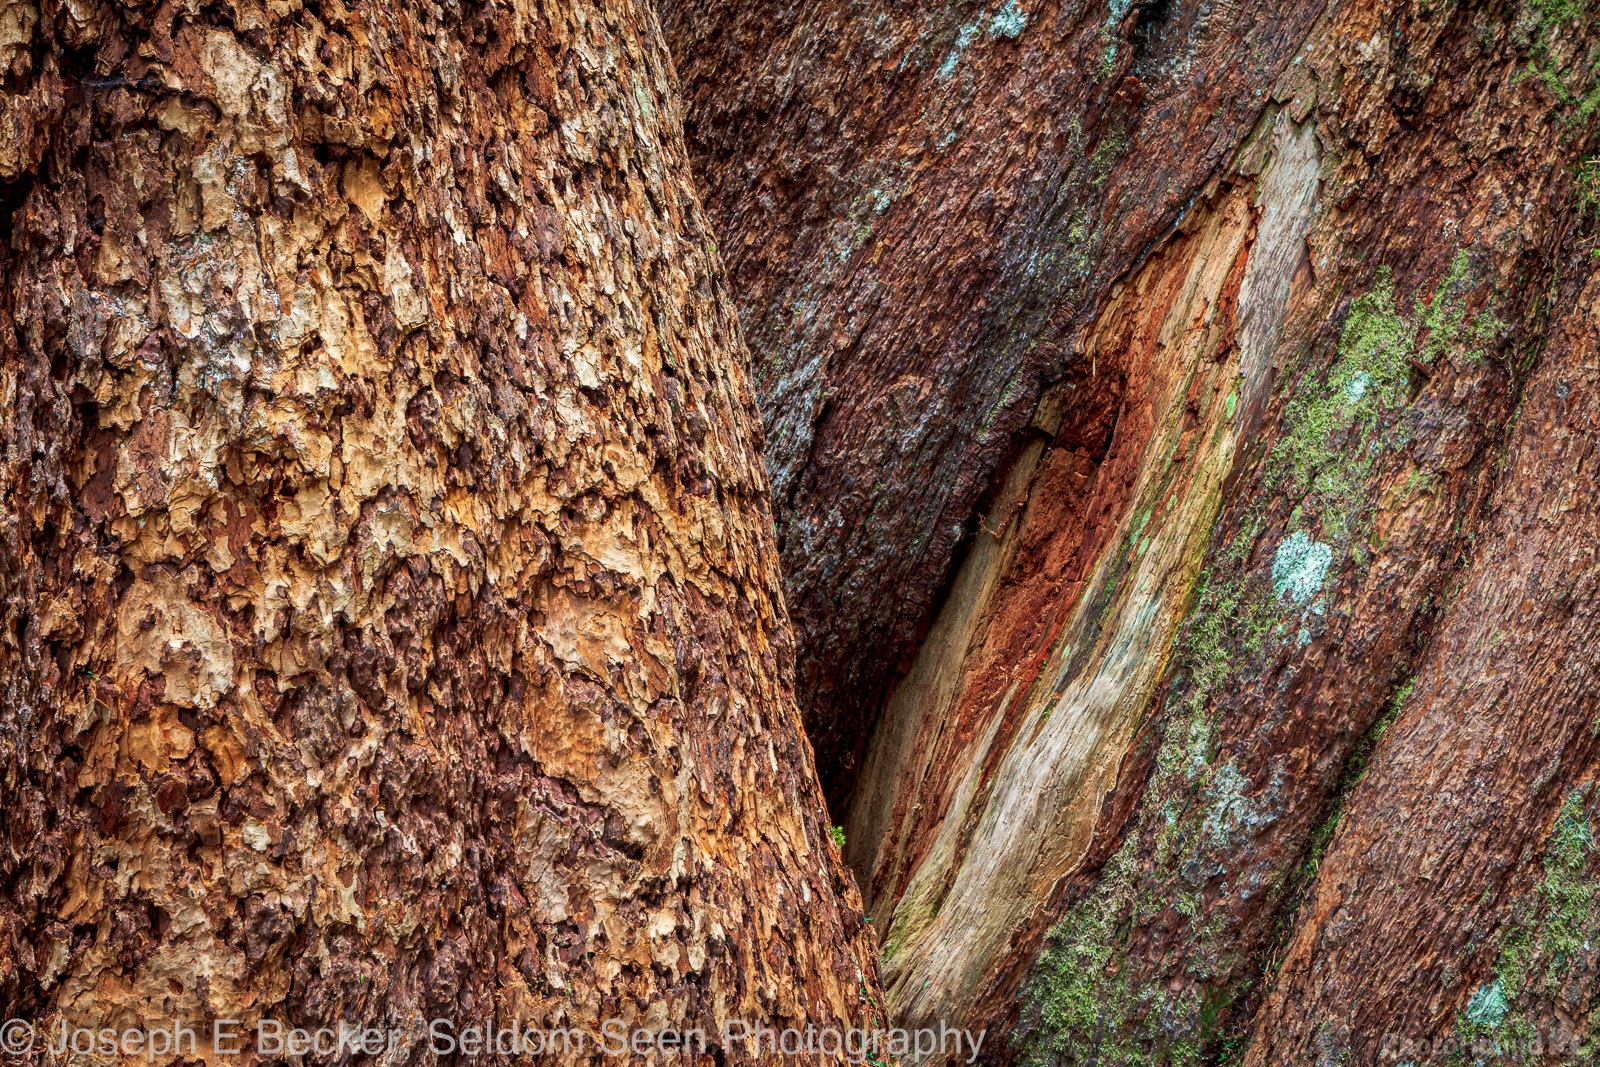 Image of Grove of the Patriarchs, Mount Rainier National Park by Joe Becker